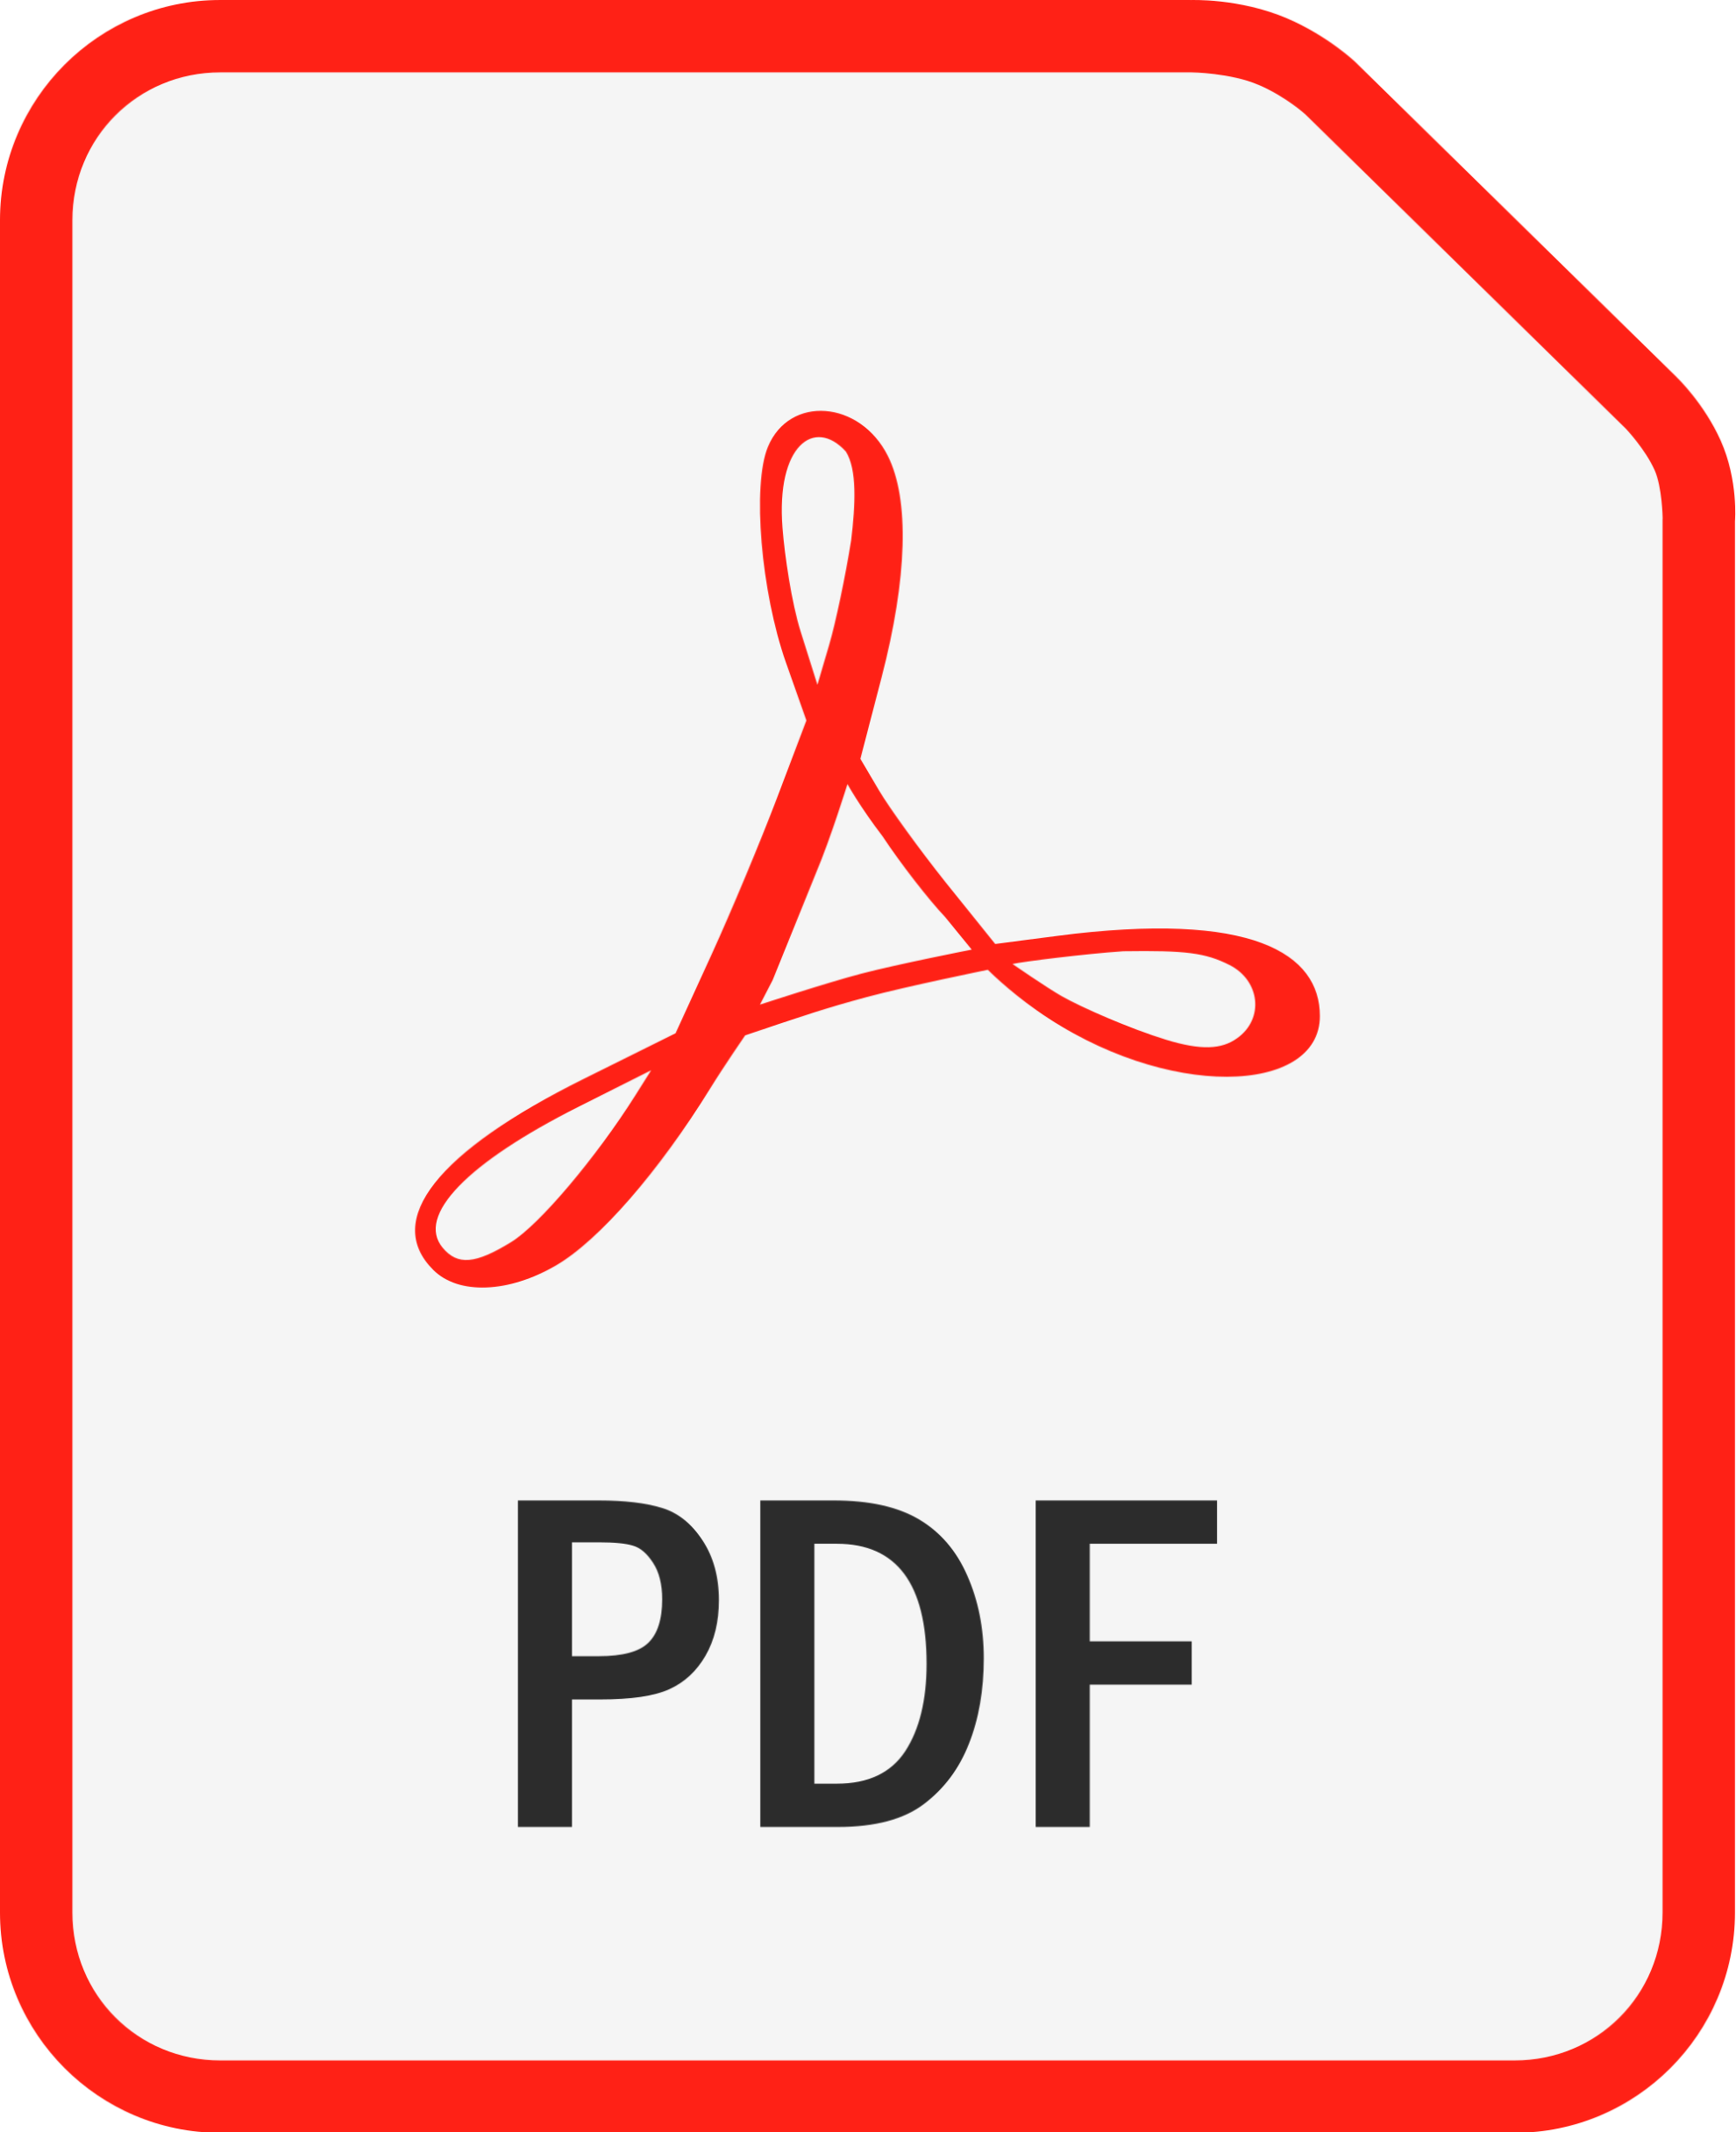 Pdf icon. Логотип pdf. Значок pdf. PD логотип. Pdf файл.